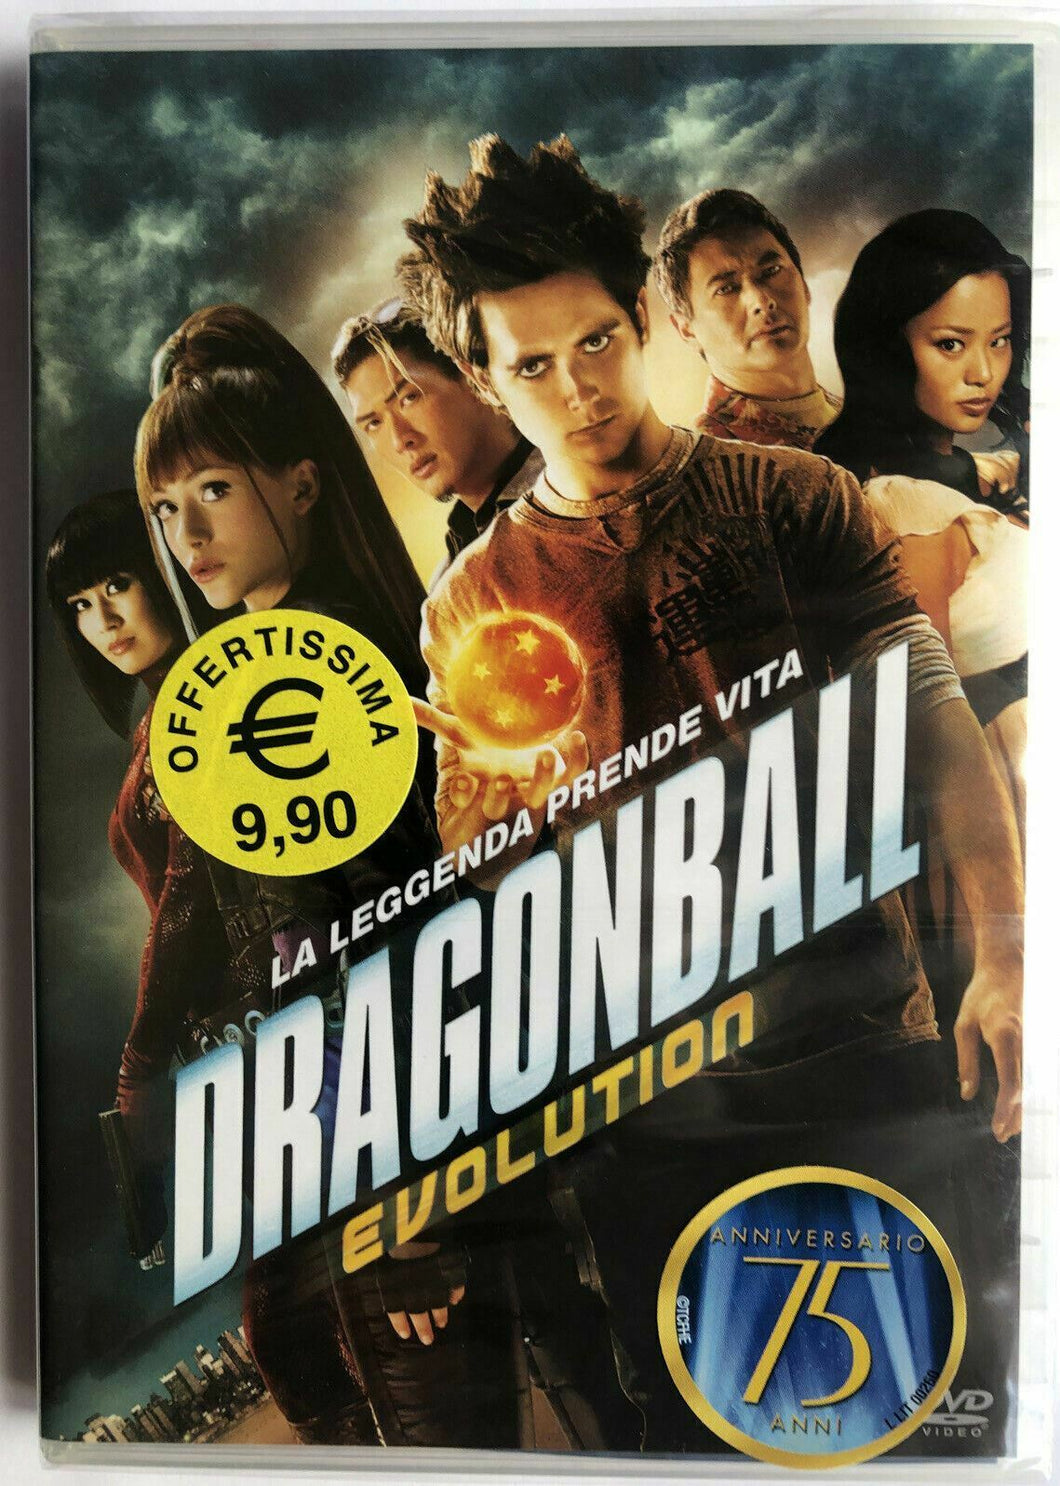 Dragonball Evolution (2009) DVD